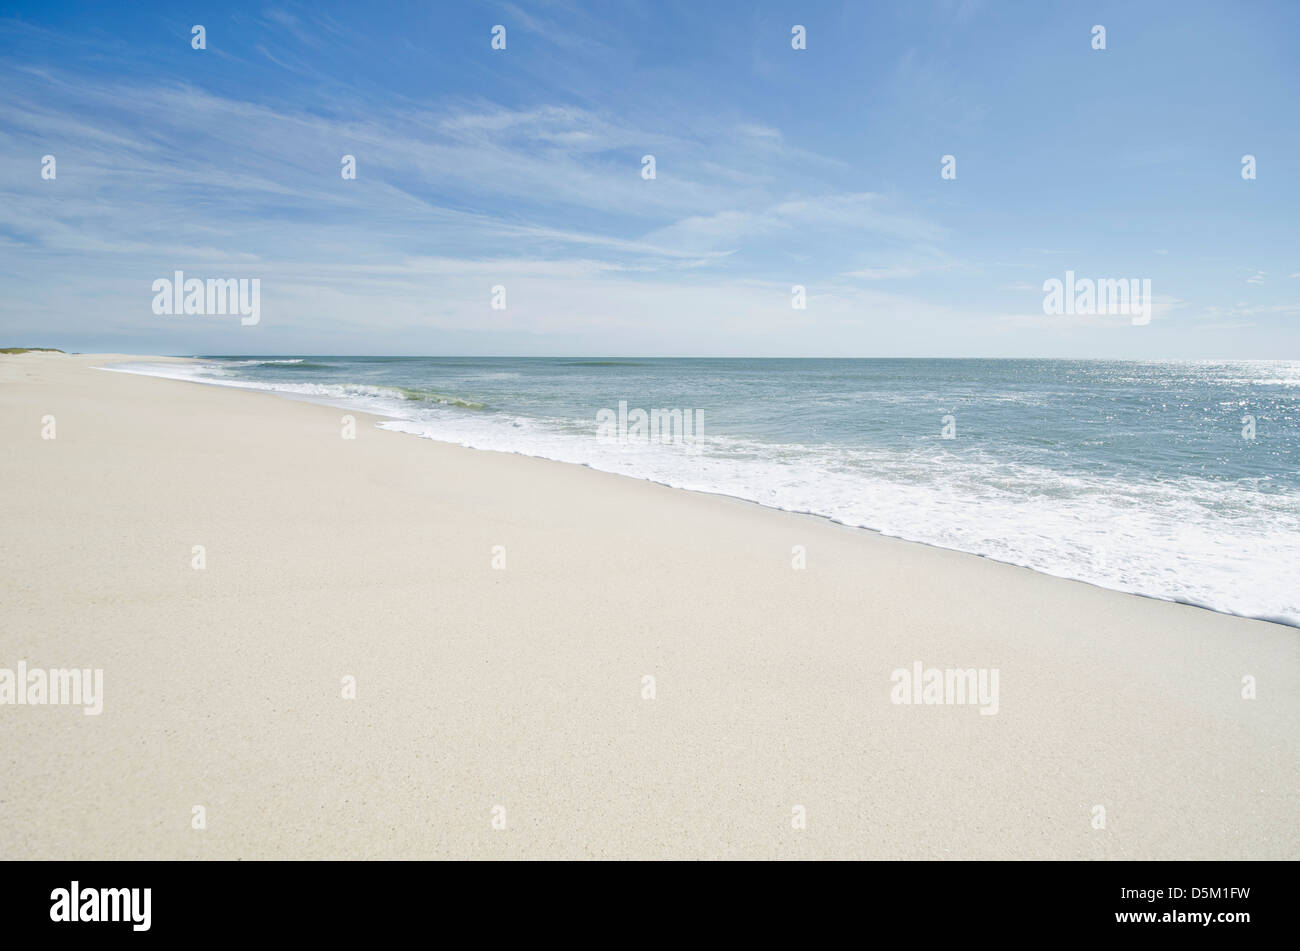 La tranquila playa de arena Foto de stock